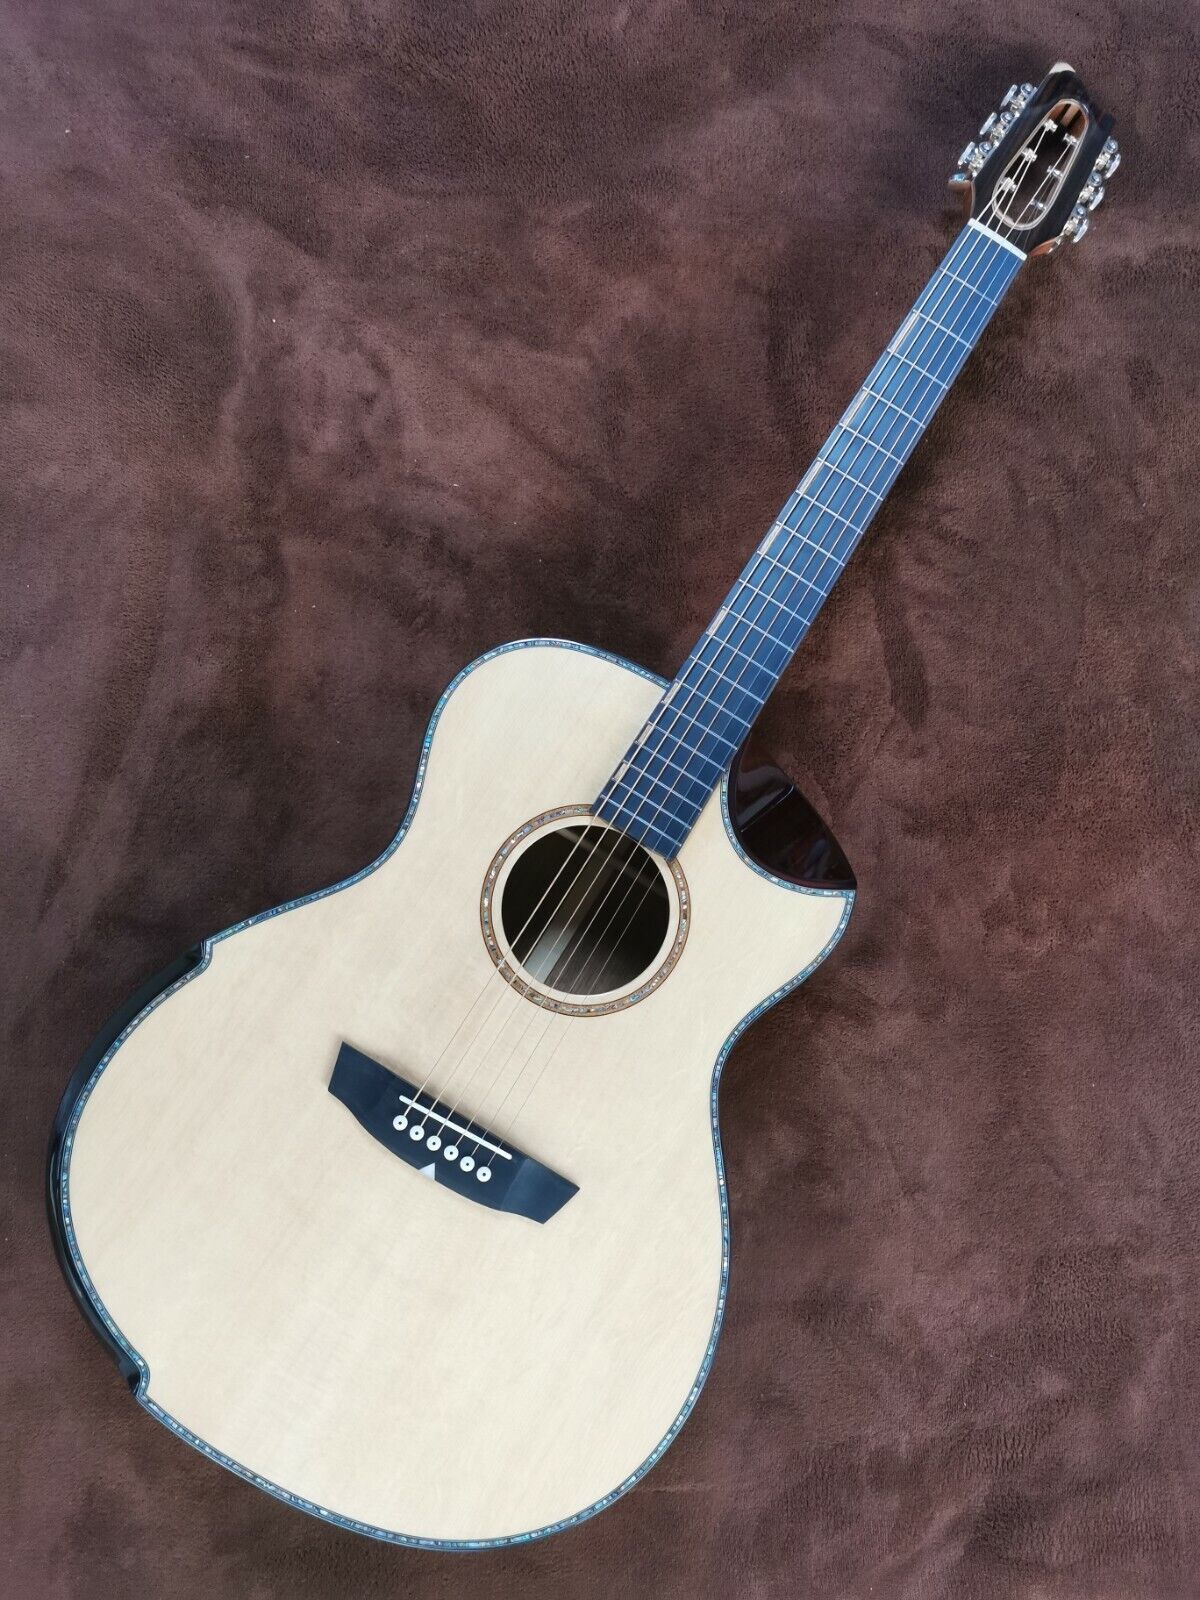 All solid wood special-shaped GA mold black finger folk acoustic guitar